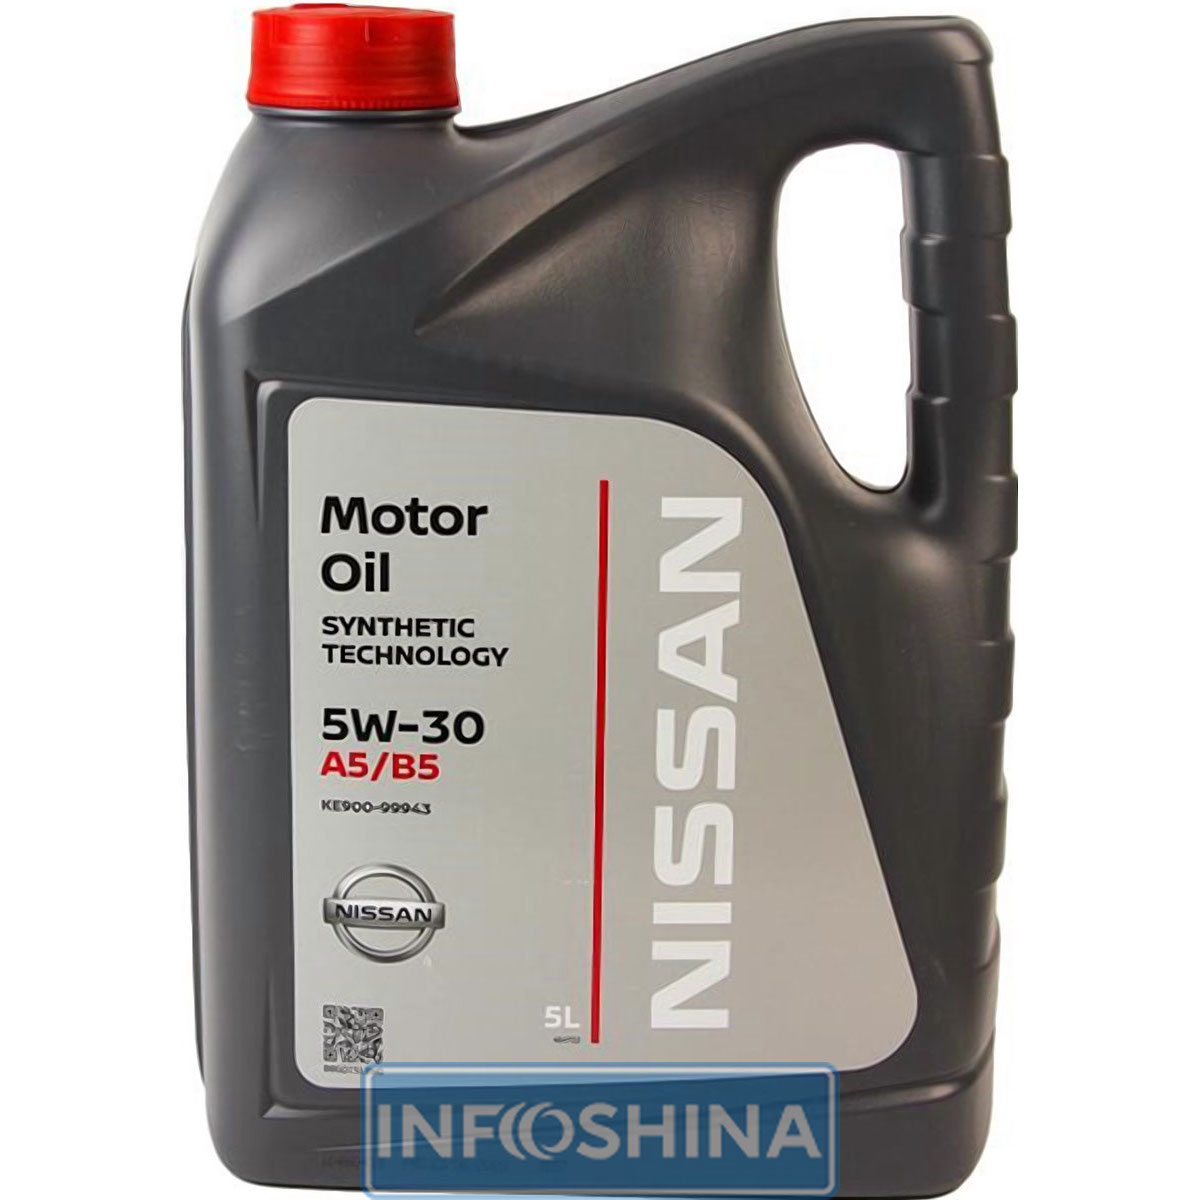 Купить масло Nissan Motor Oil 5W-30 A5/B5 (5л)